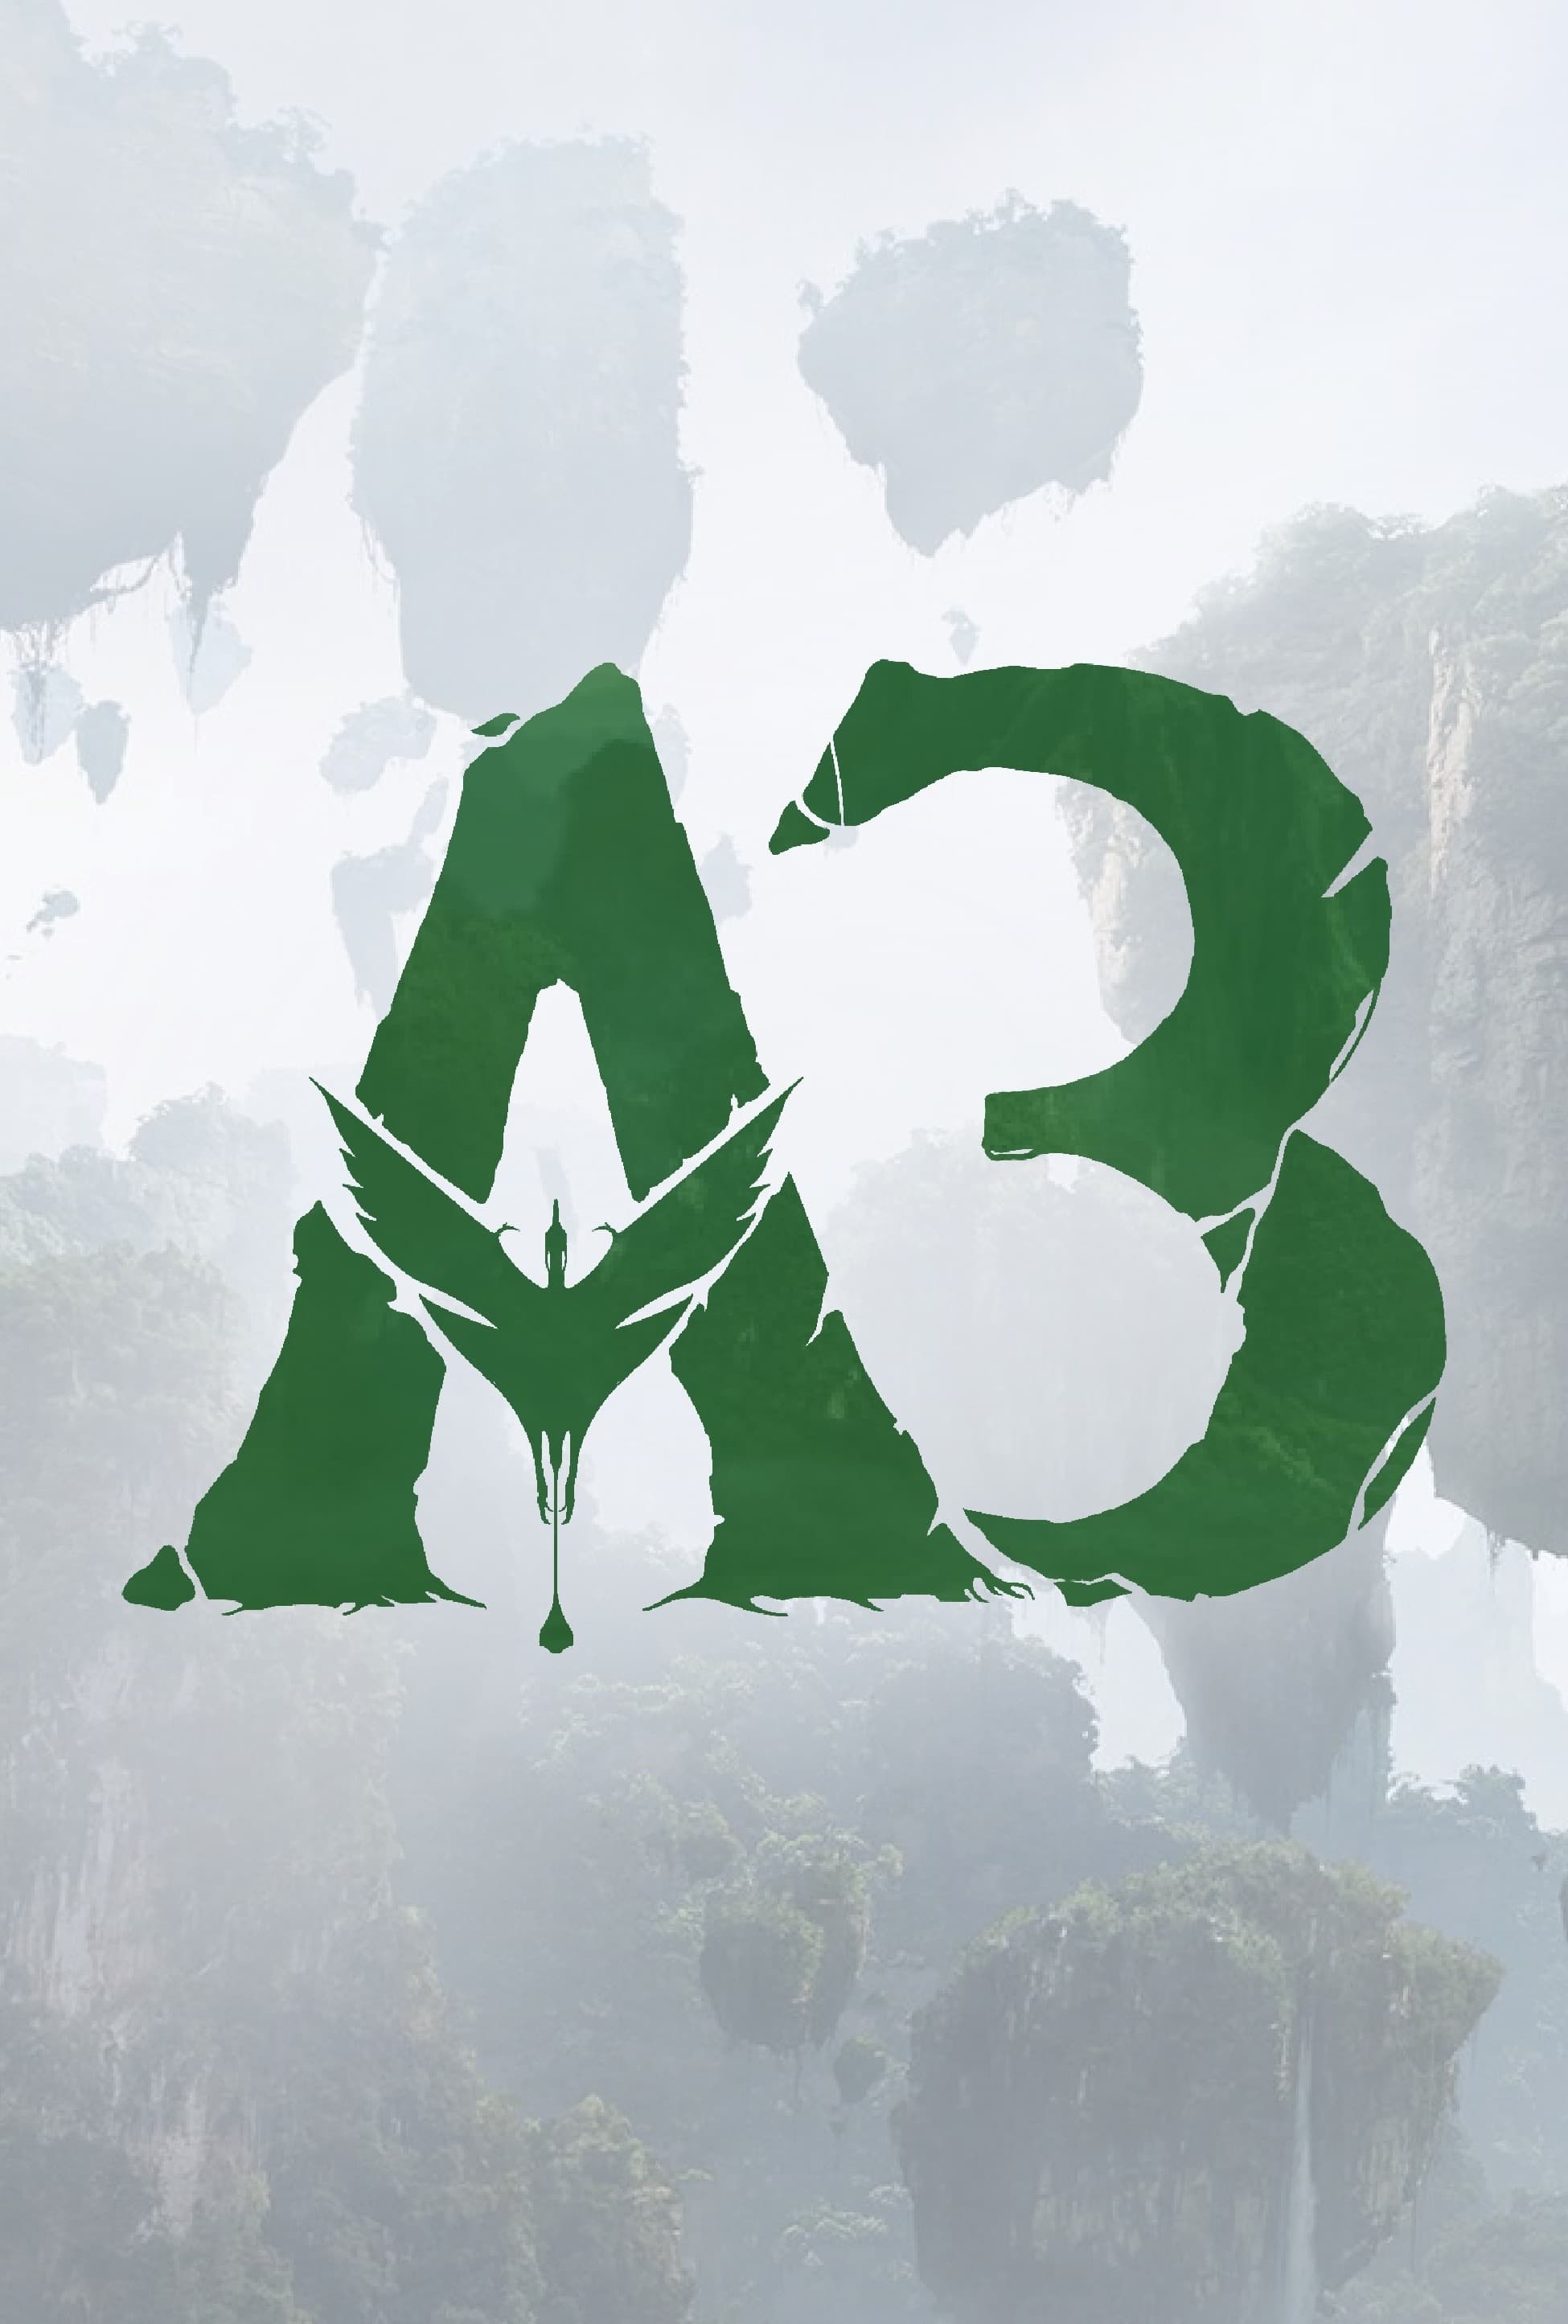 Avatar 3 Movie poster